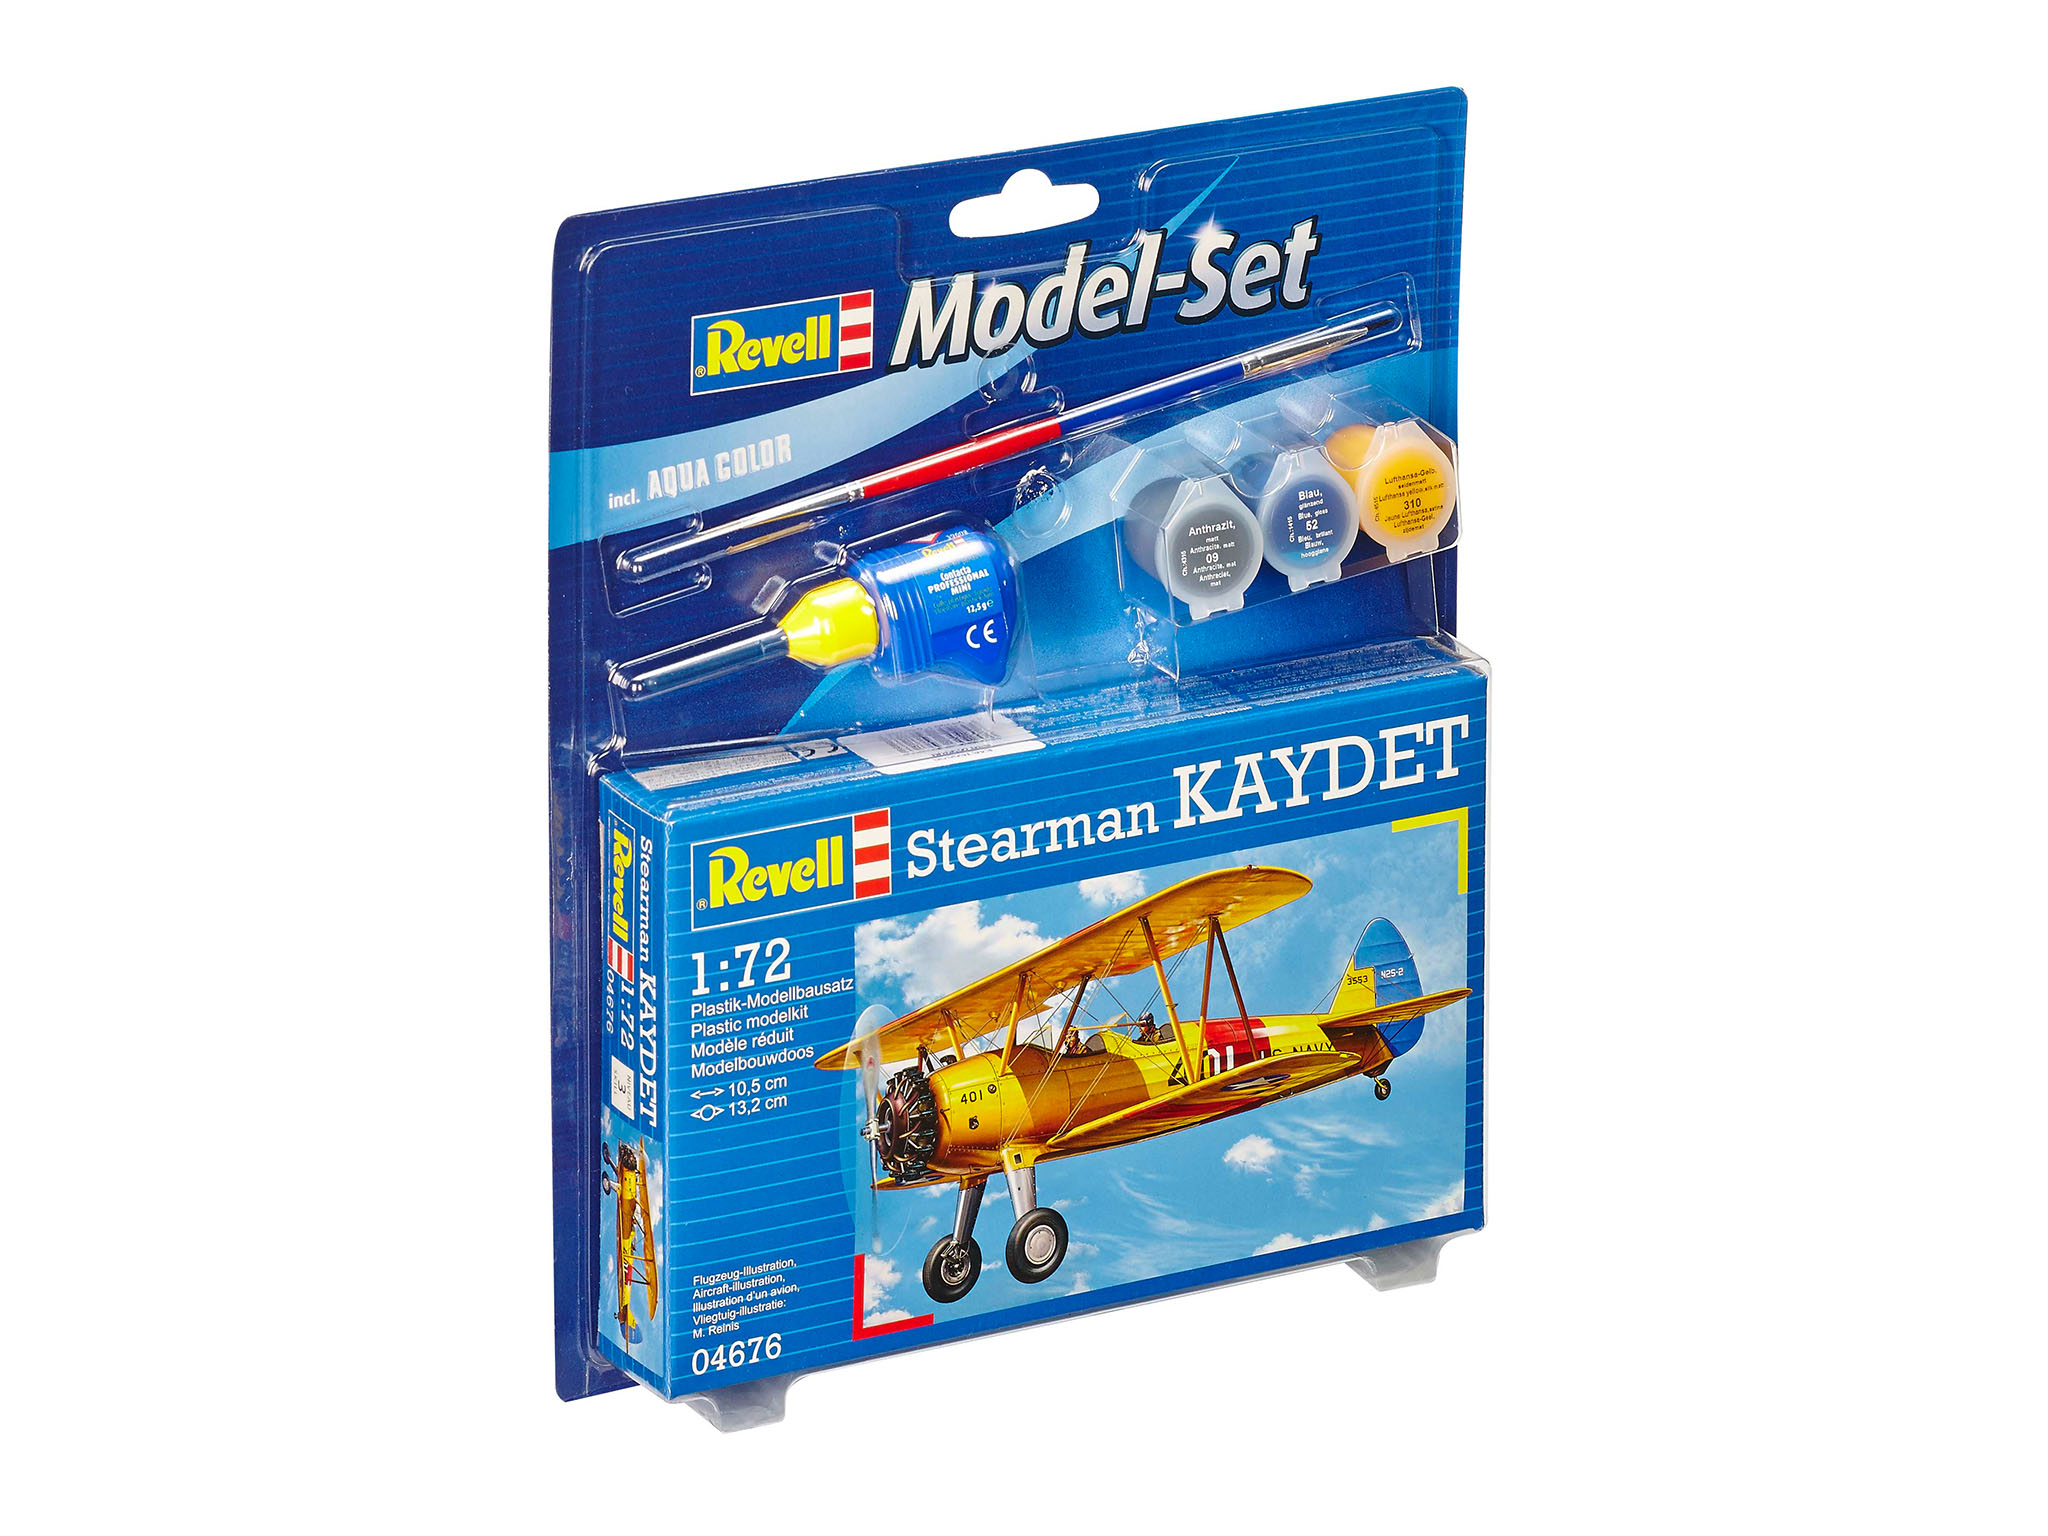 KAYDET SET REVELL STEARMAN Modellbausatz, Mehrfarbig 64676 MODEL